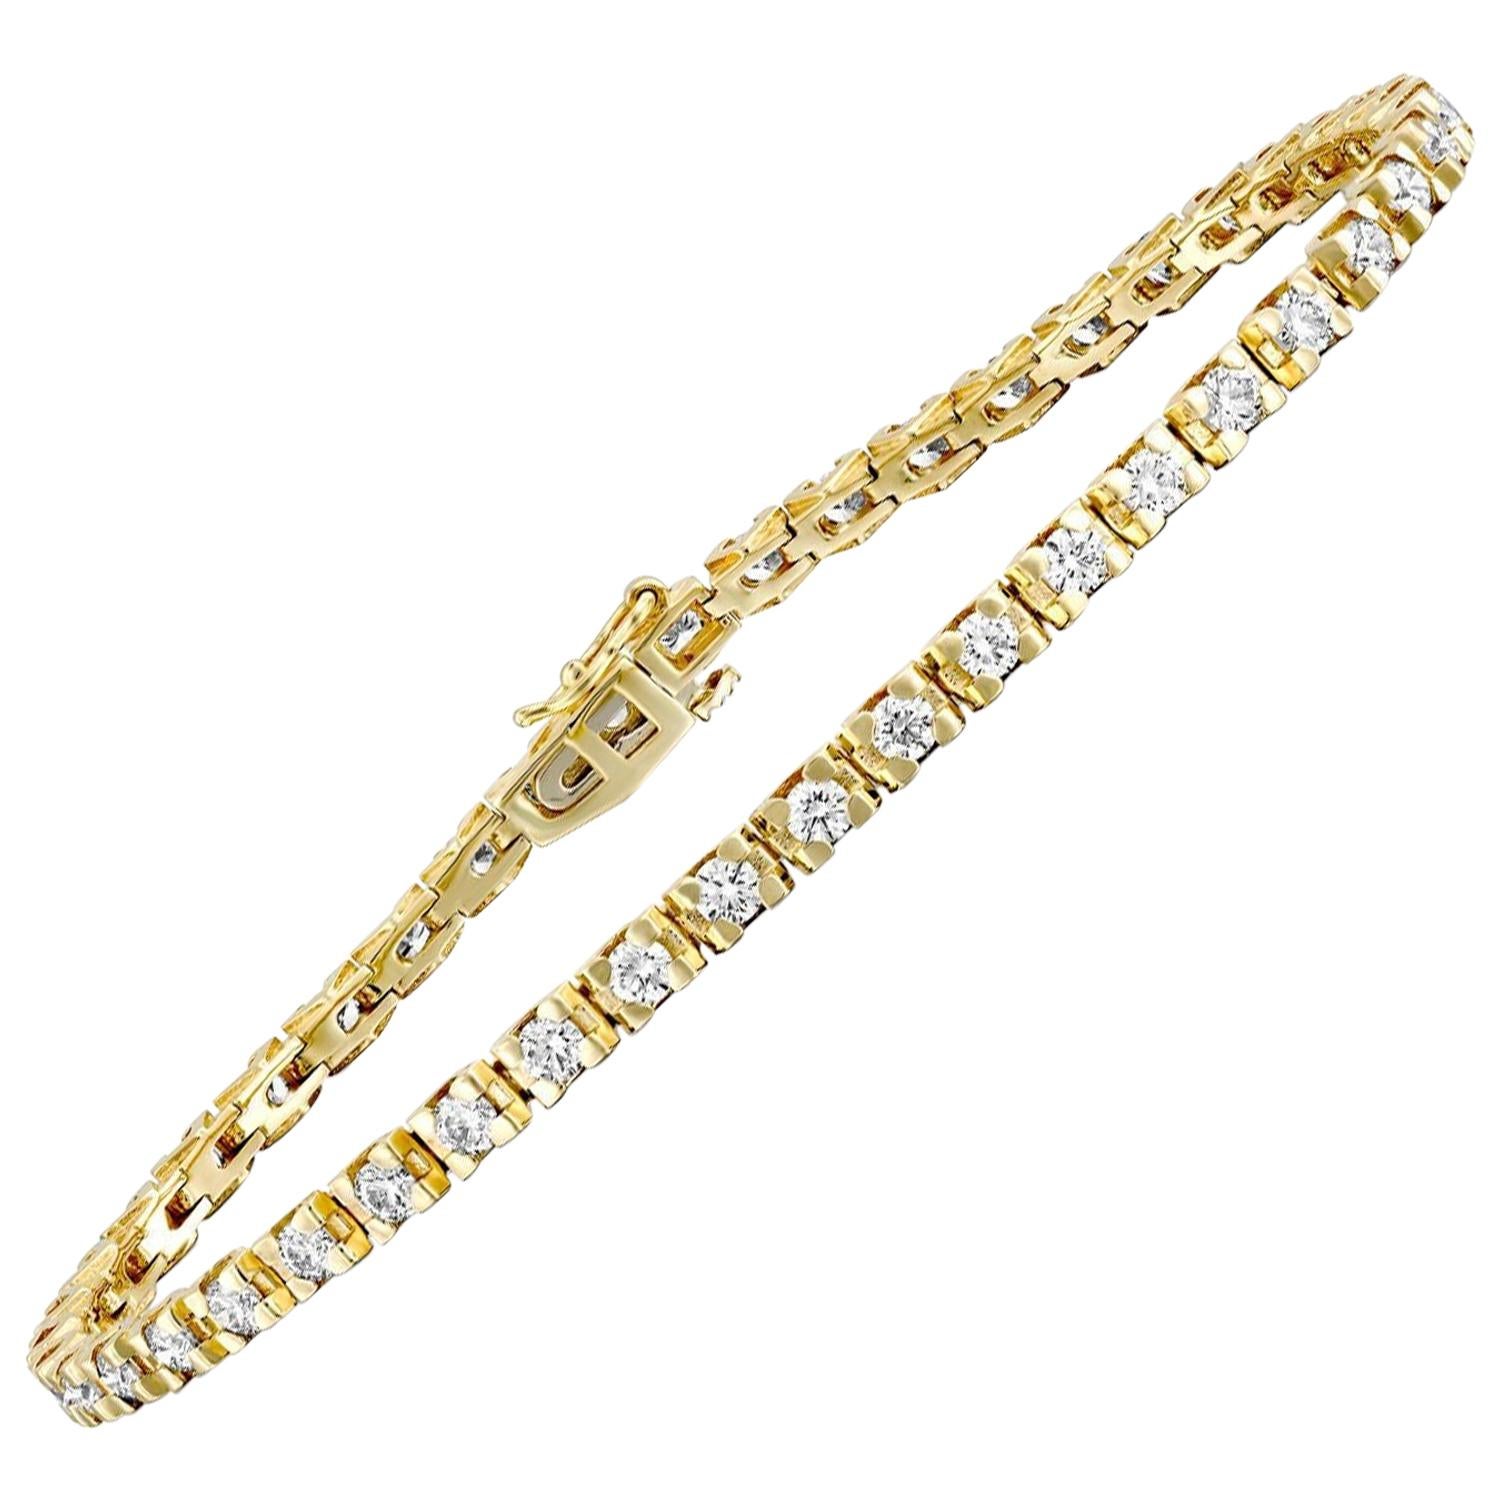 2 1/2 Carat Round Diamond Bracelet, 14 Karat Yellow Gold Diamond Tennis Bracelet